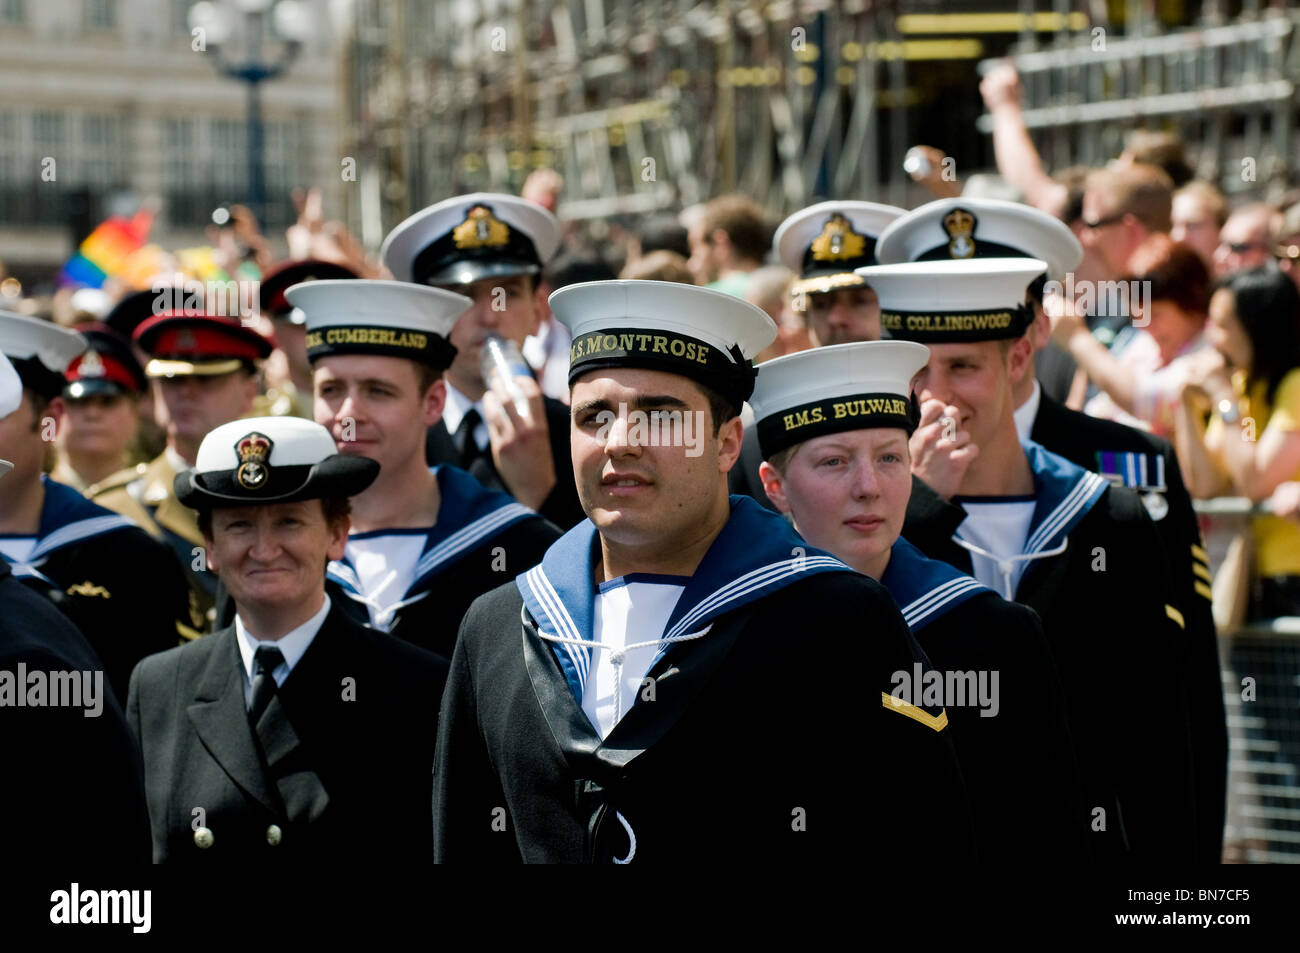 Royal Navy marschieren bei Pride London feiern. Stockfoto